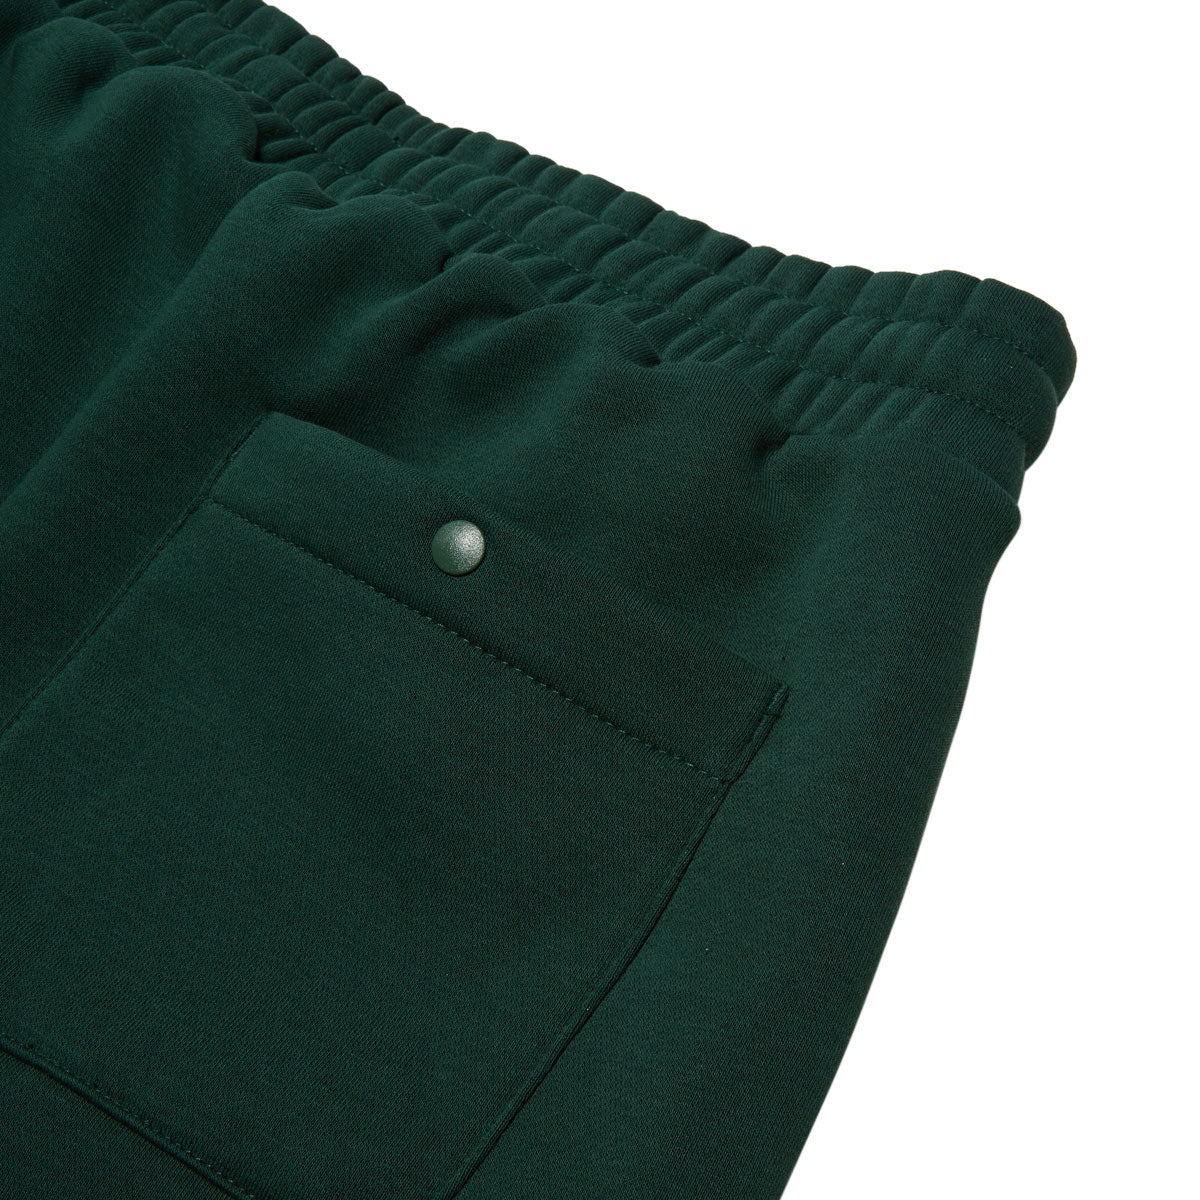 DGK Wonderland Fleece Shorts - Green image 5